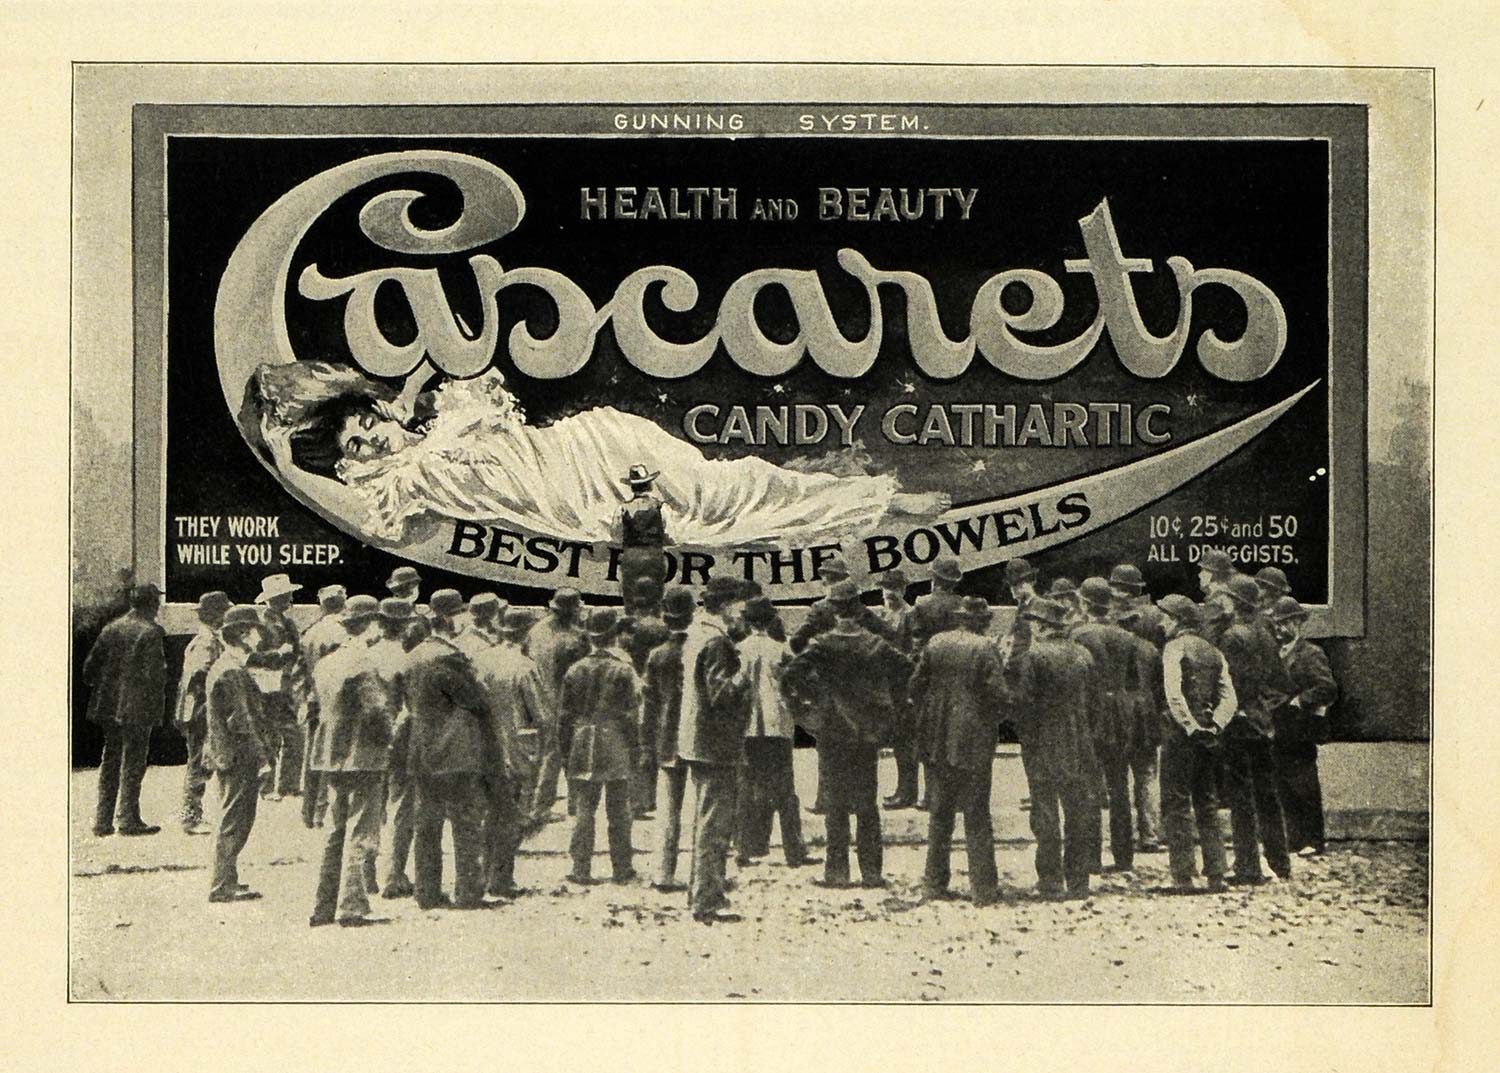 1901 Ad Cascarets Candy Cathartic Bowel System Work While Sleep Gunning EM2